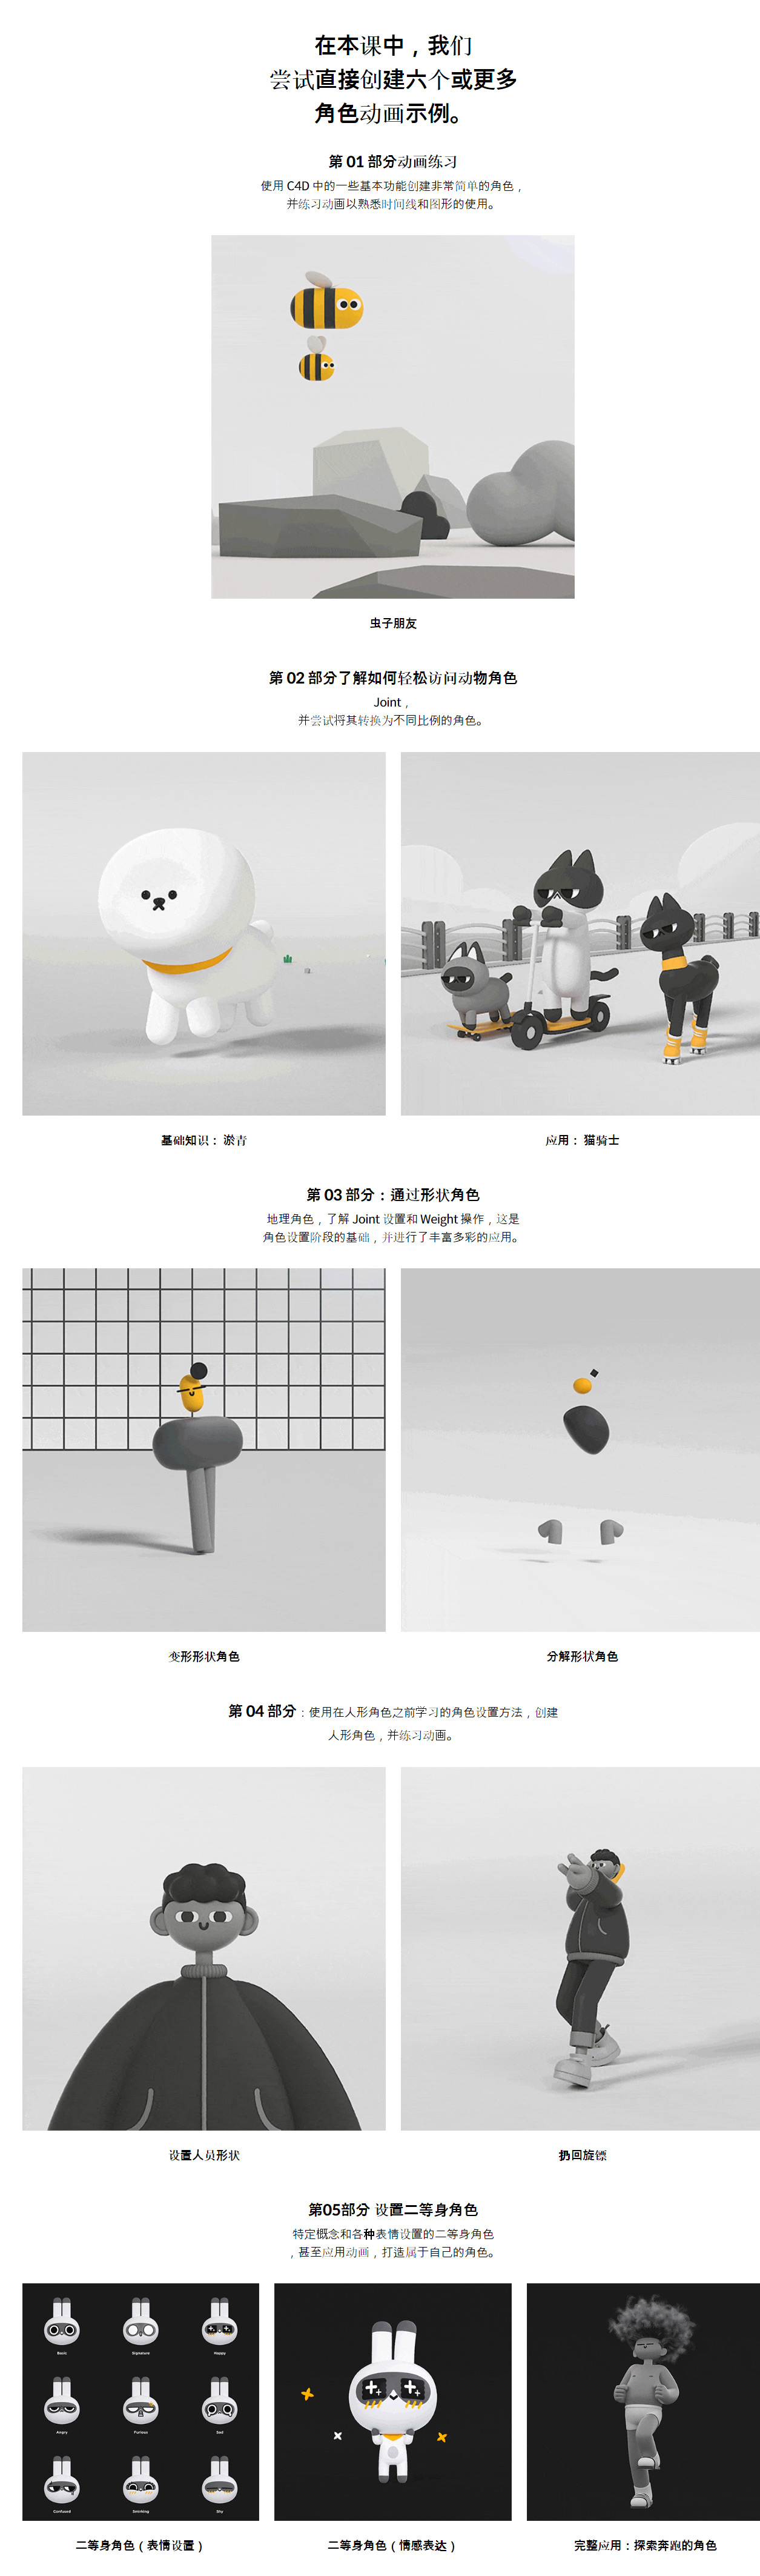 C4D教程-6个C4D卡通人物角色动画案例技术教程韩语无字幕Coloso – C4D Character Animation Complete with 6 Themes